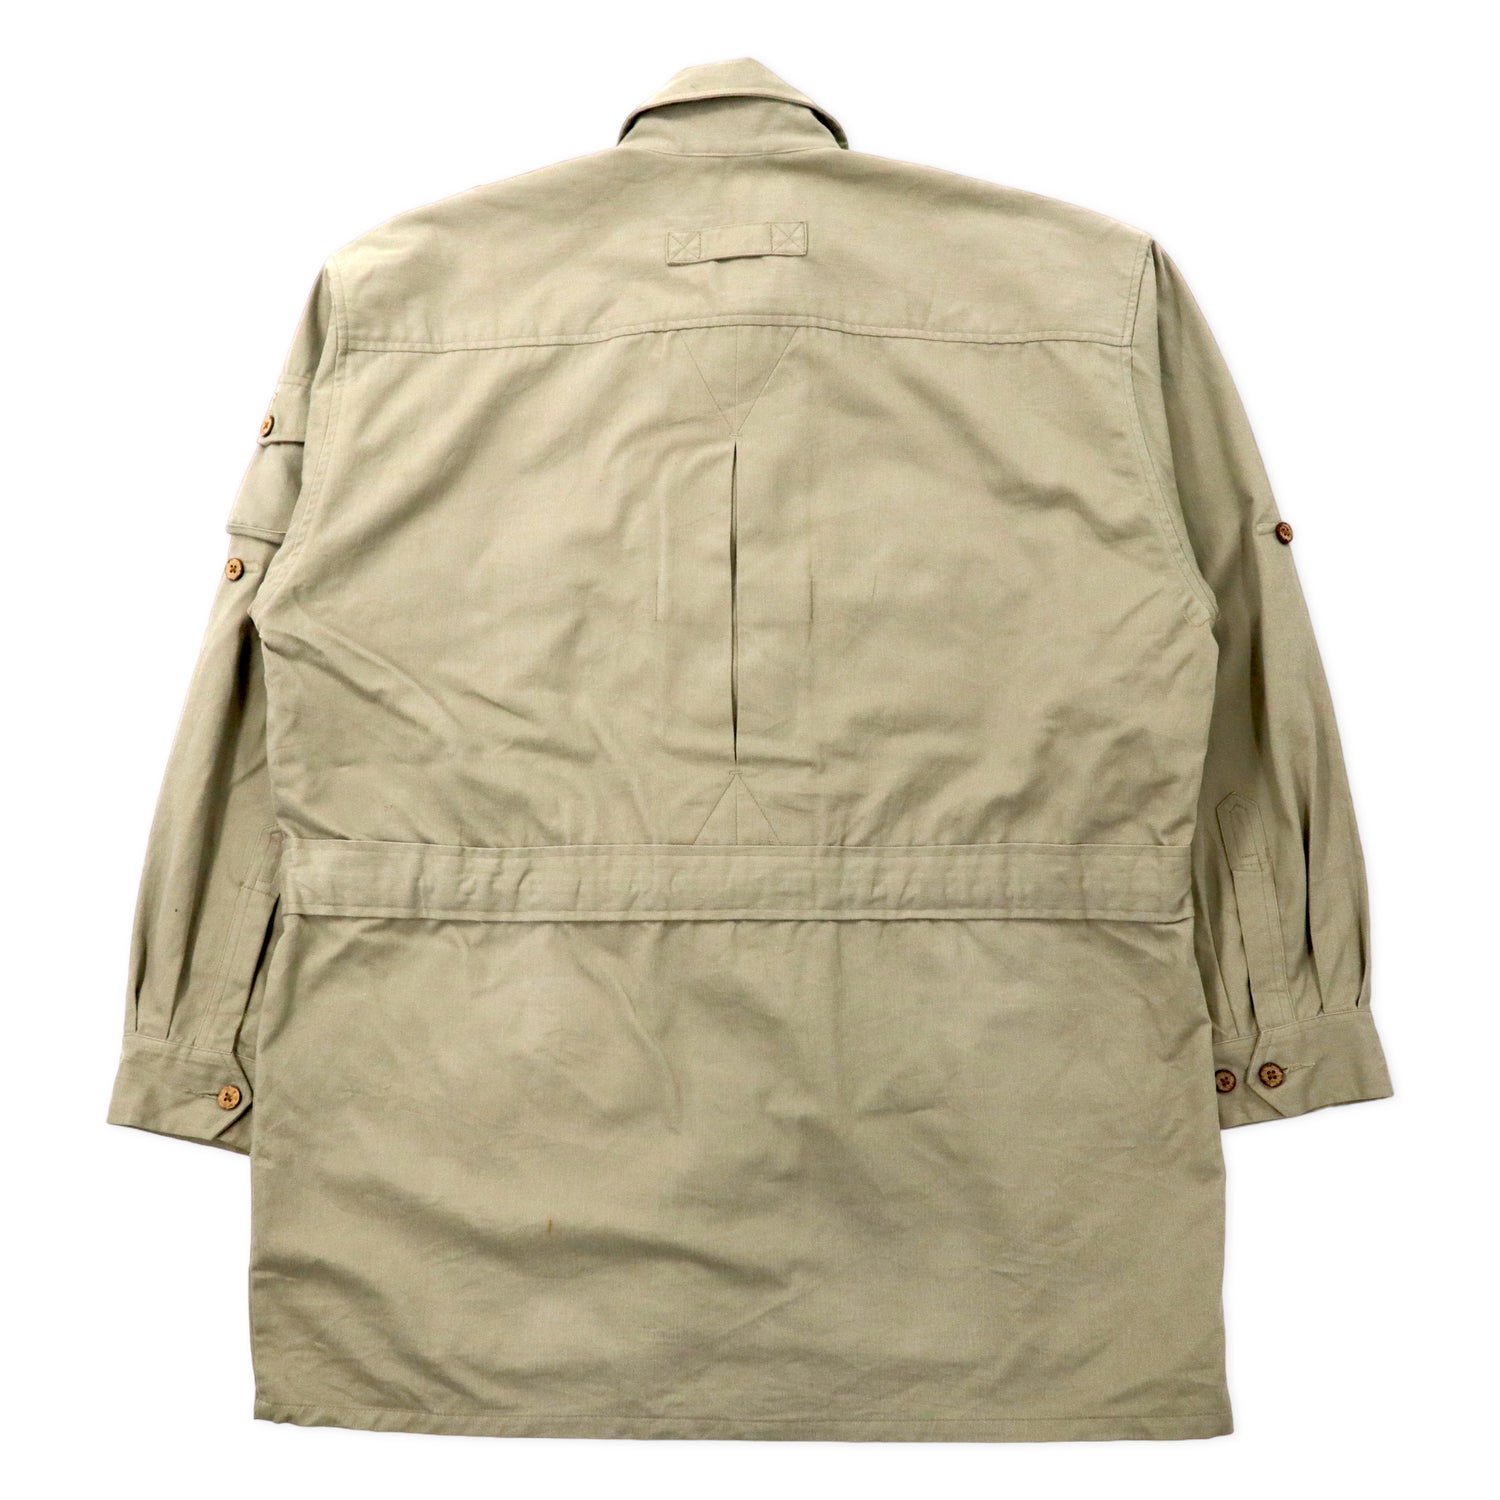 ORVIS 90's Safari Jacket L Beige Cotton Draw Code Ecuador Made 